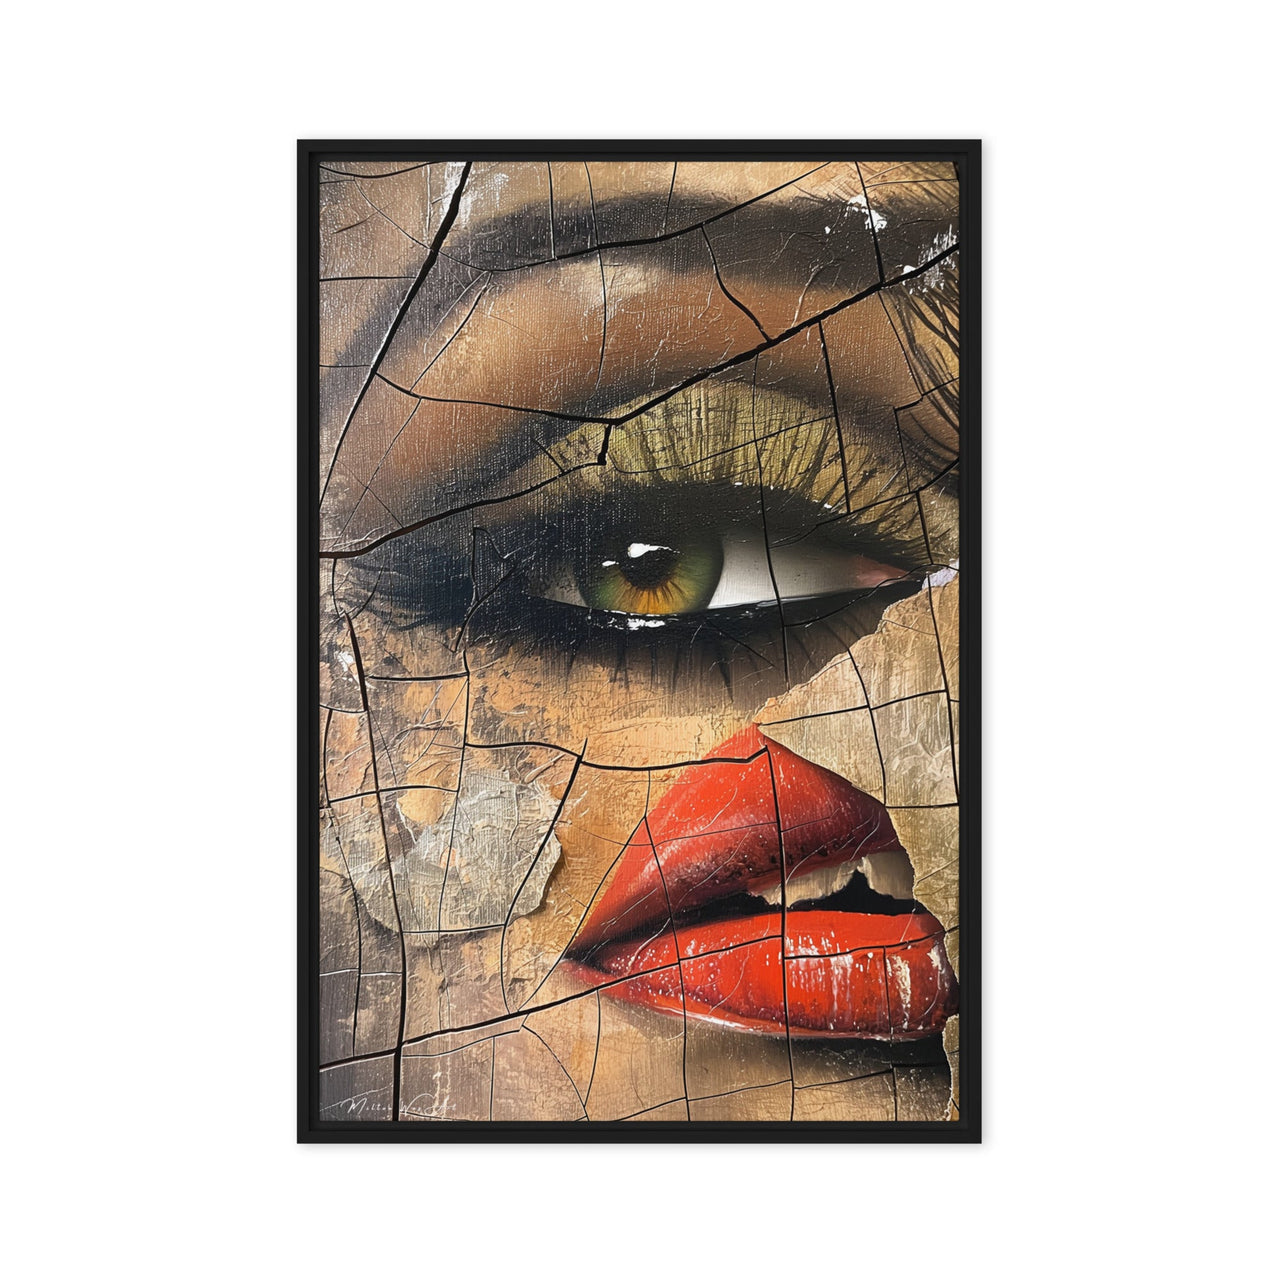 Textured Eye & Lips Abstract Framed Canvas Art in Pine Frame - 1.25" Thick - Modern Open-Back Design - Milton Wes Art Framed Wall Art